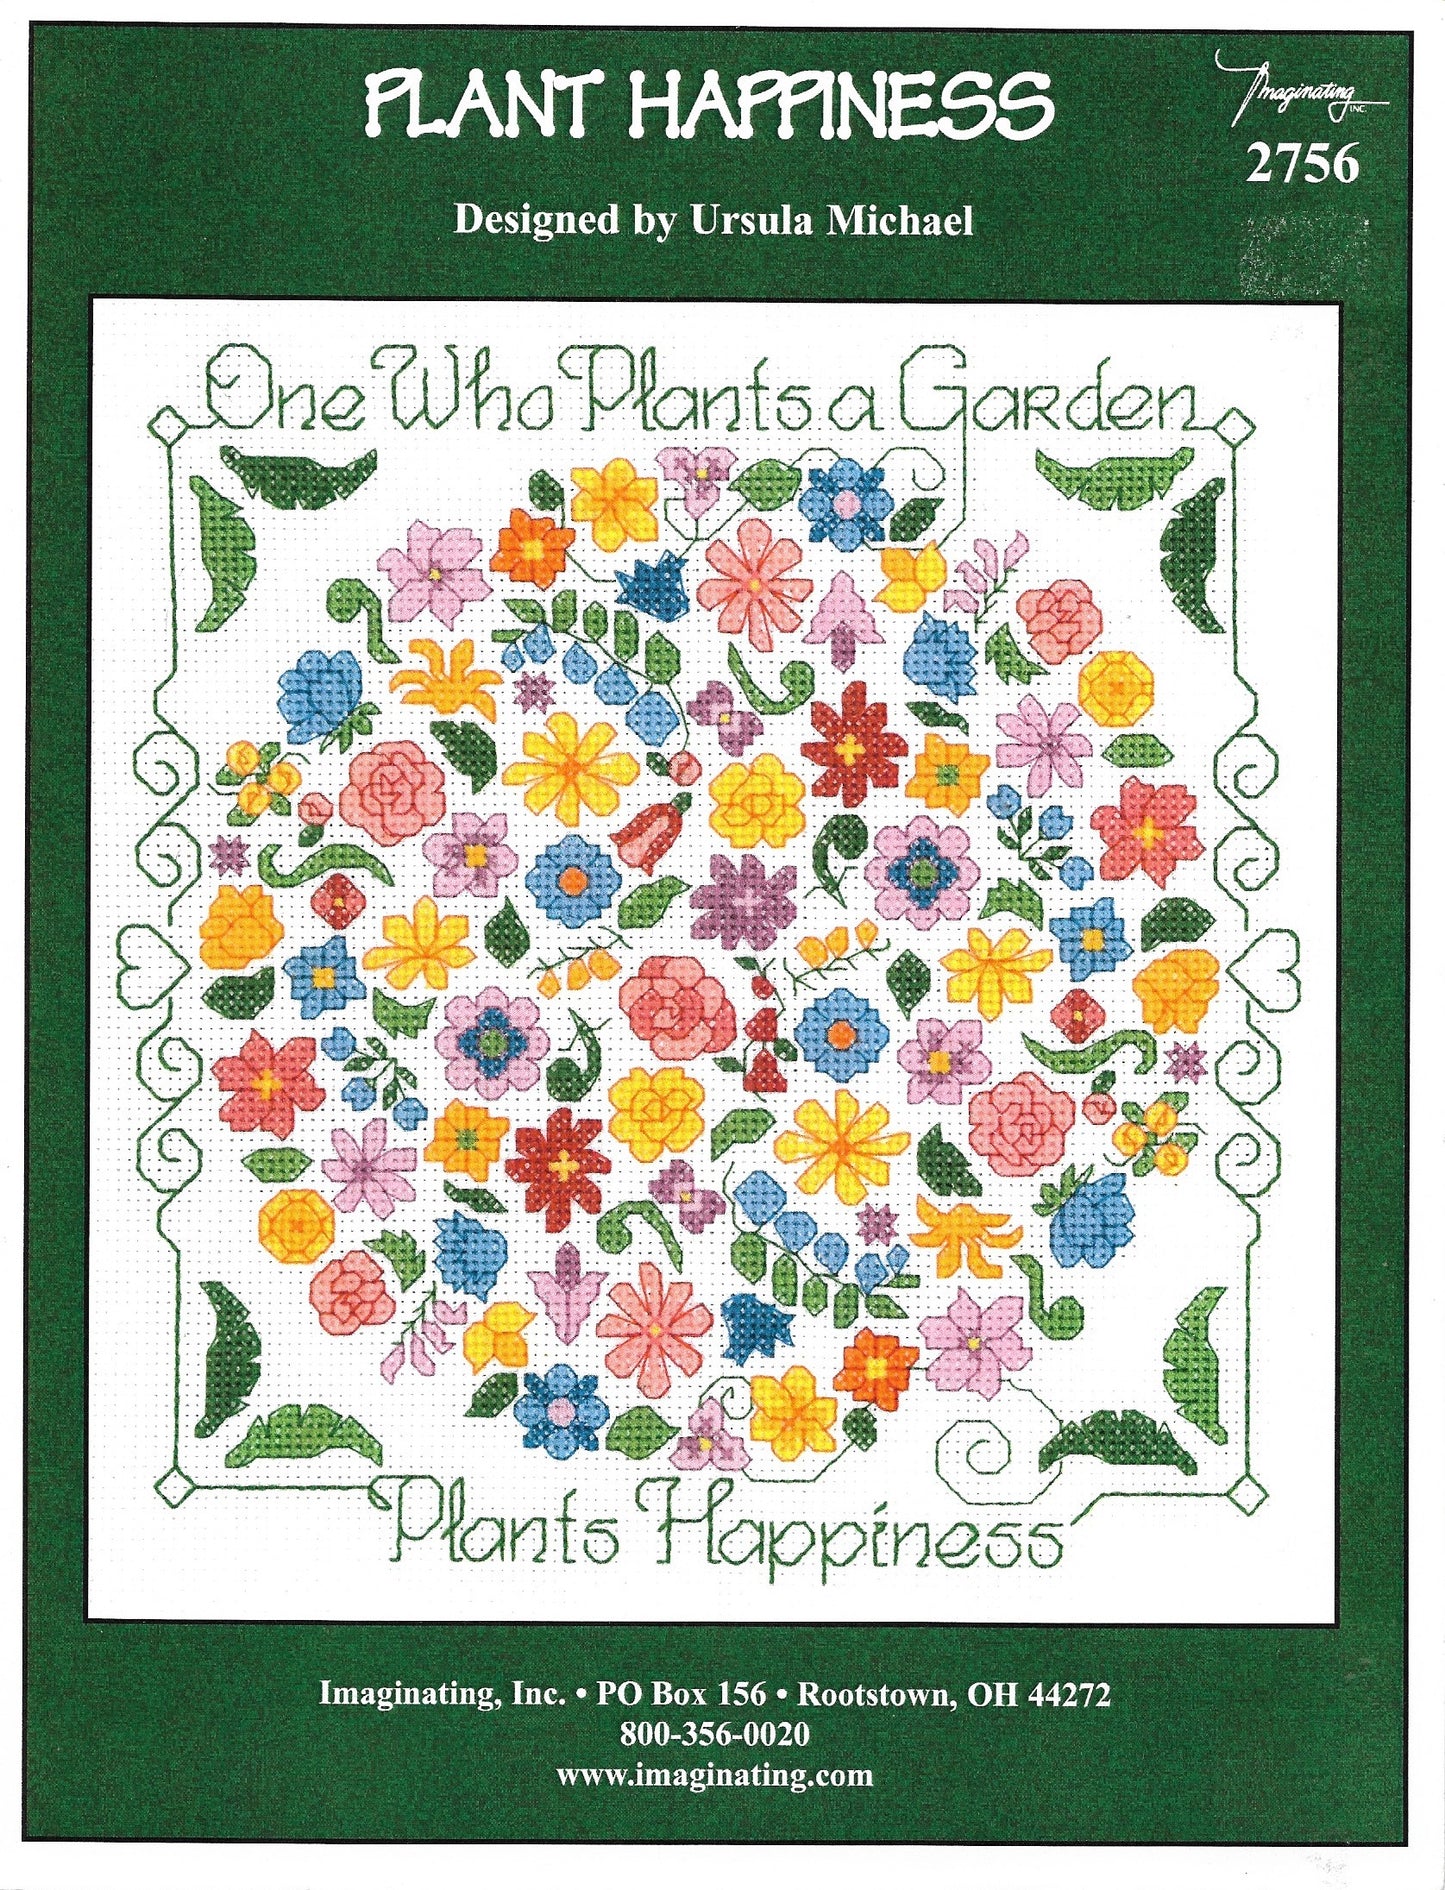 Imaginating Plant Happiness 2756 cross stitch pattern